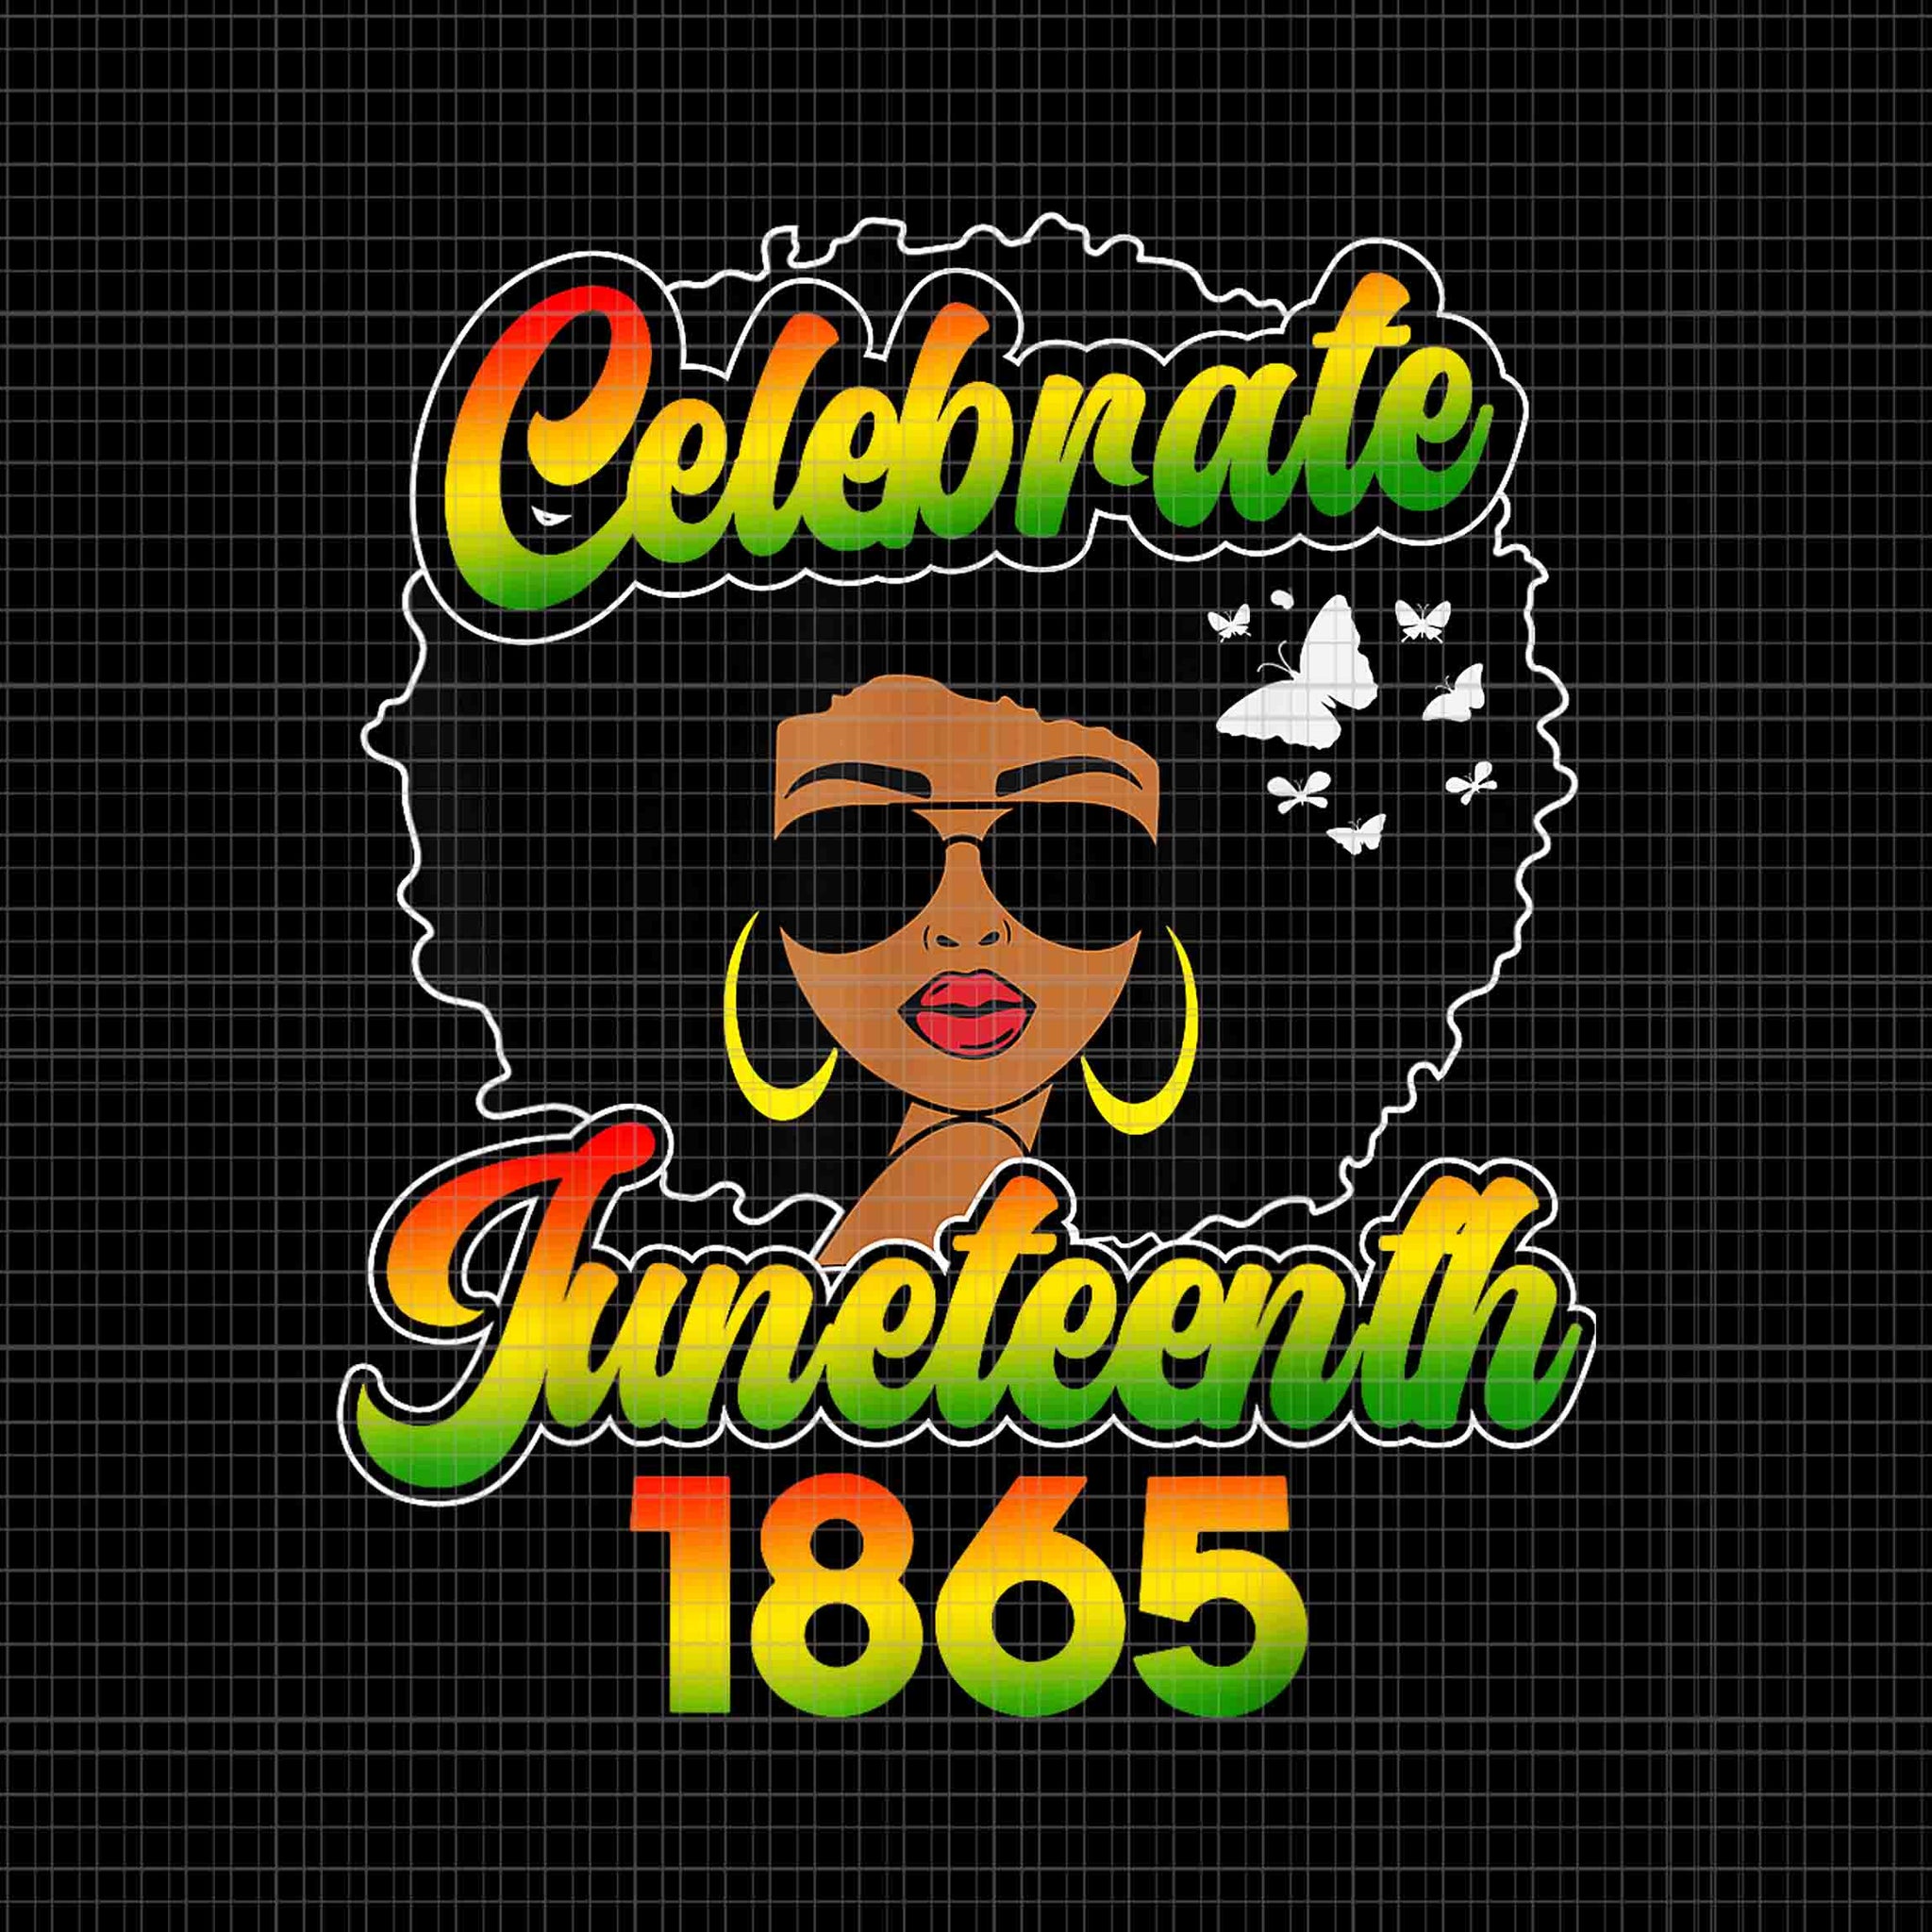 Celebrate Juneteenth Free-Ish Since 1865 Emancipation BLM Png, Celebrate Juneteenth 1865 Png, Juneteenth 1865 Png